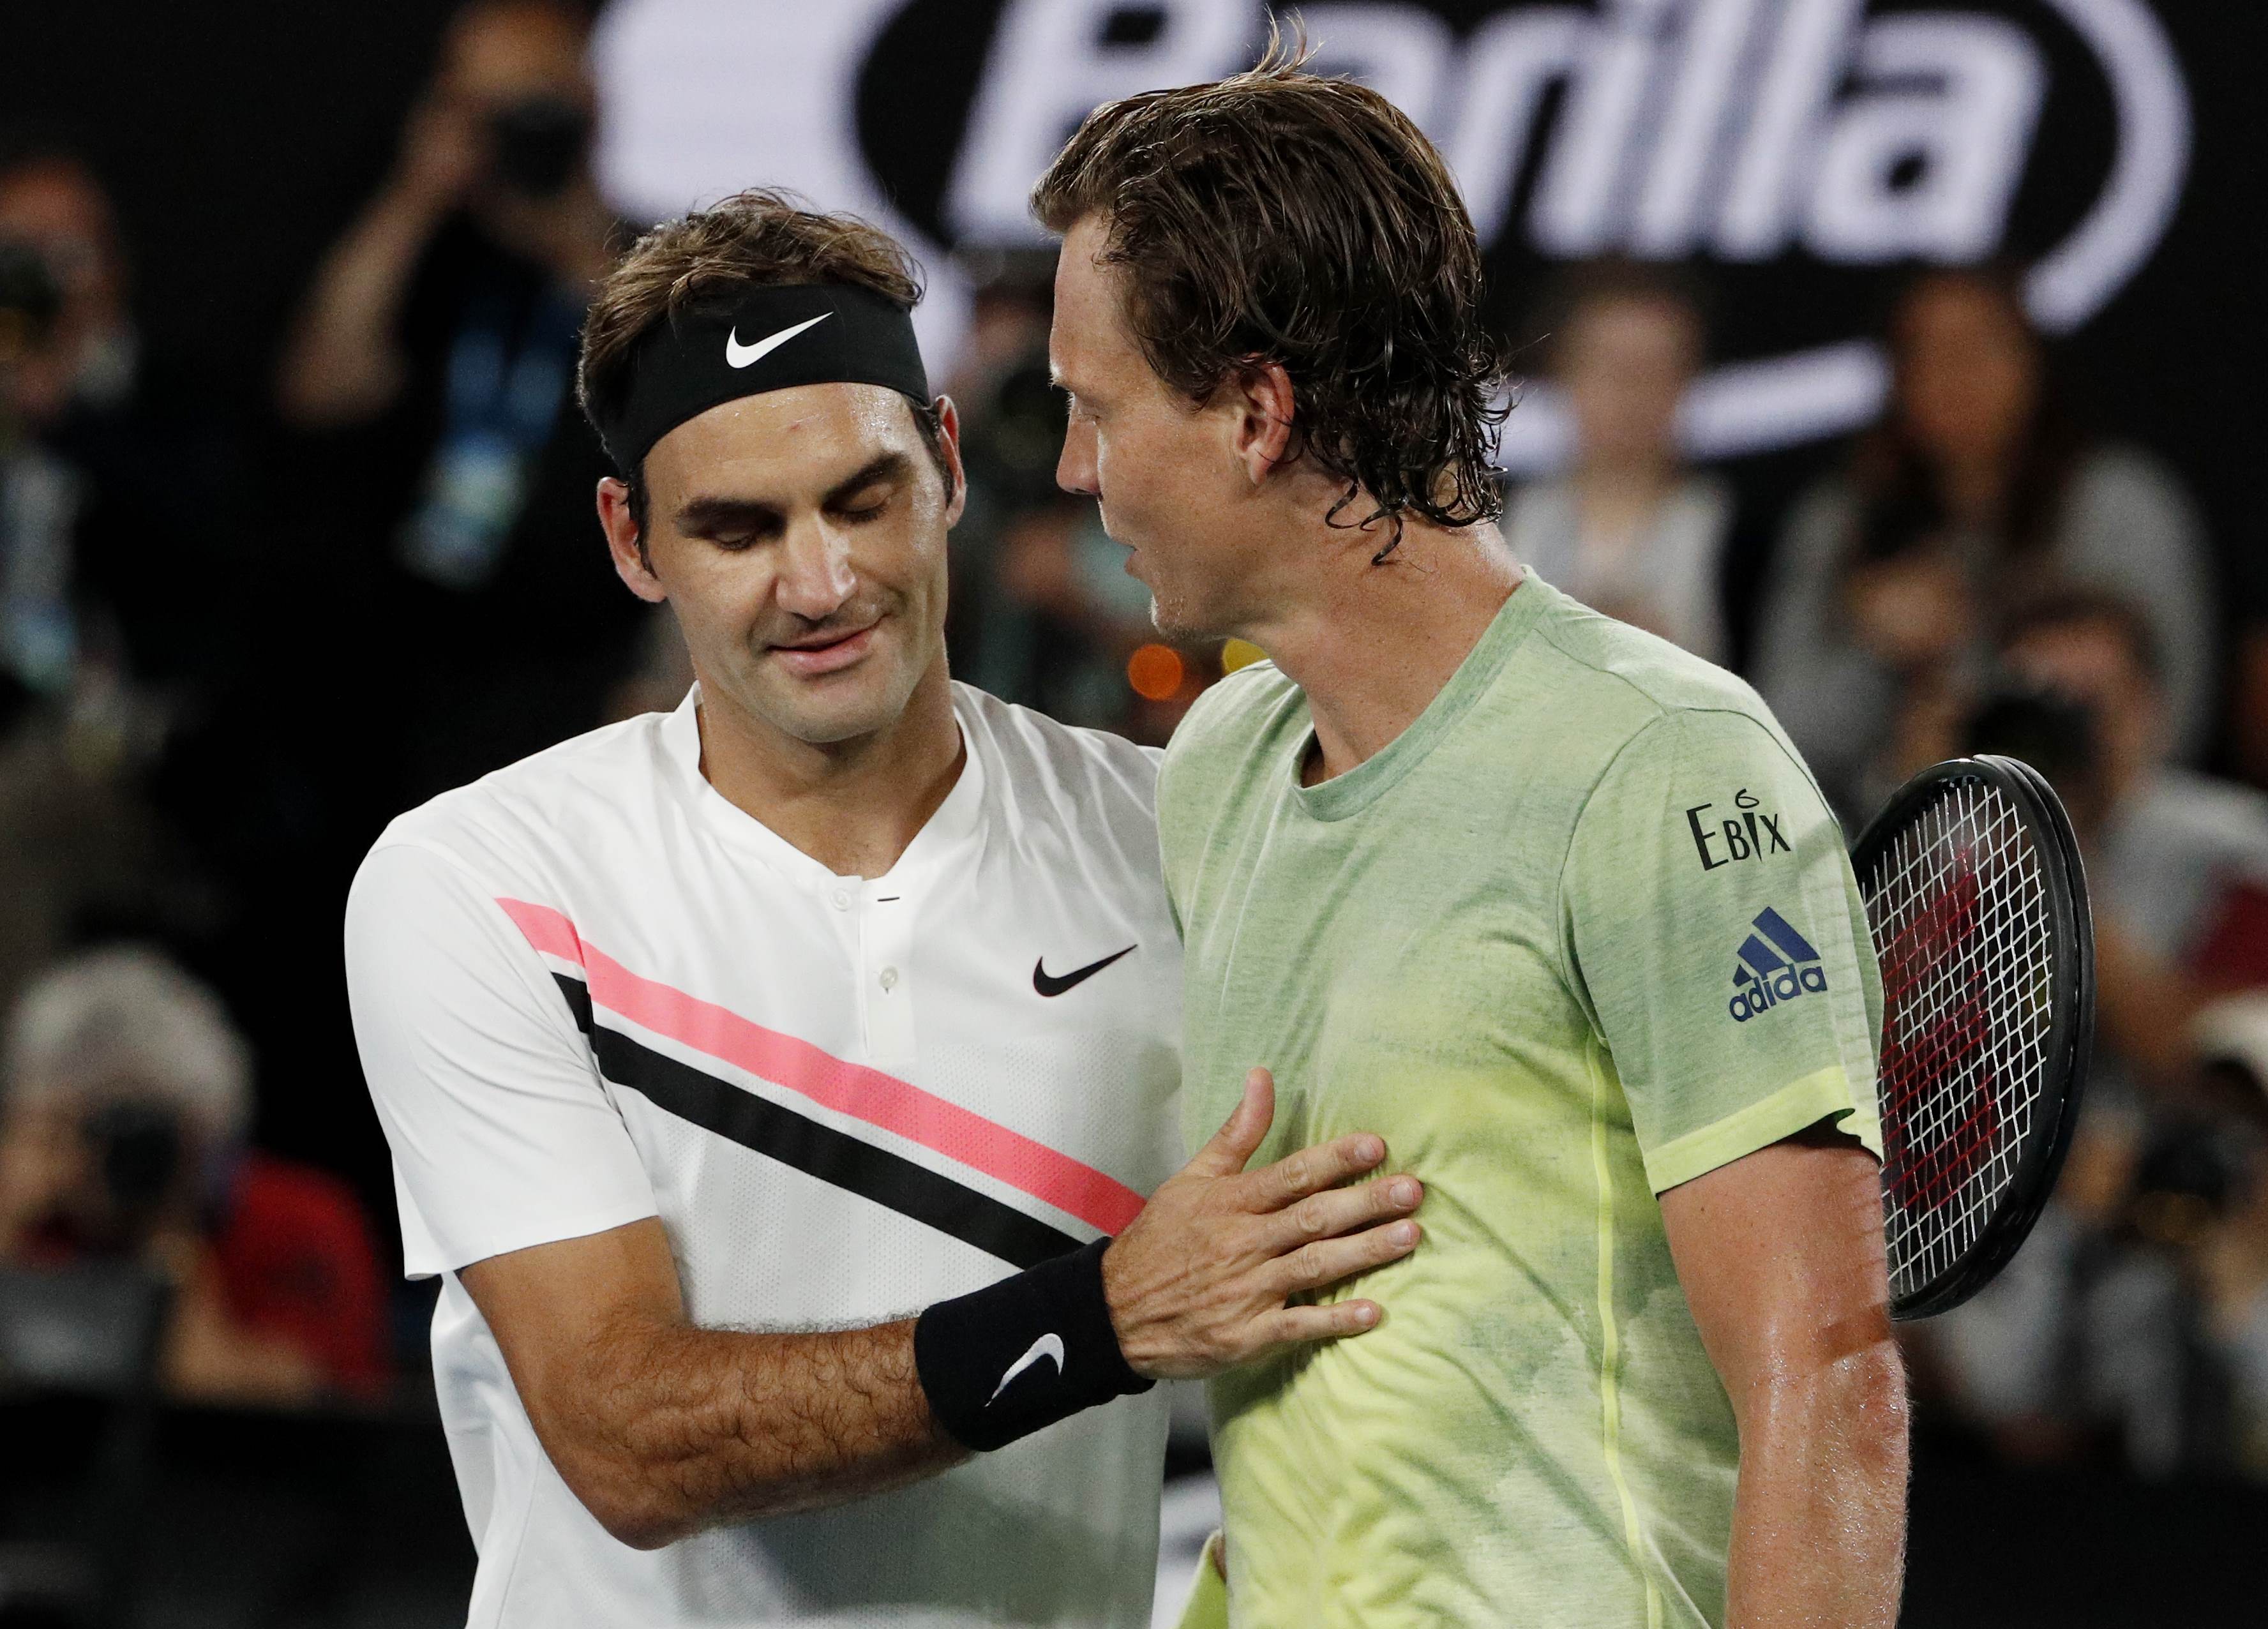 Tennis: Federer dispatches Berdych to reach semifinal